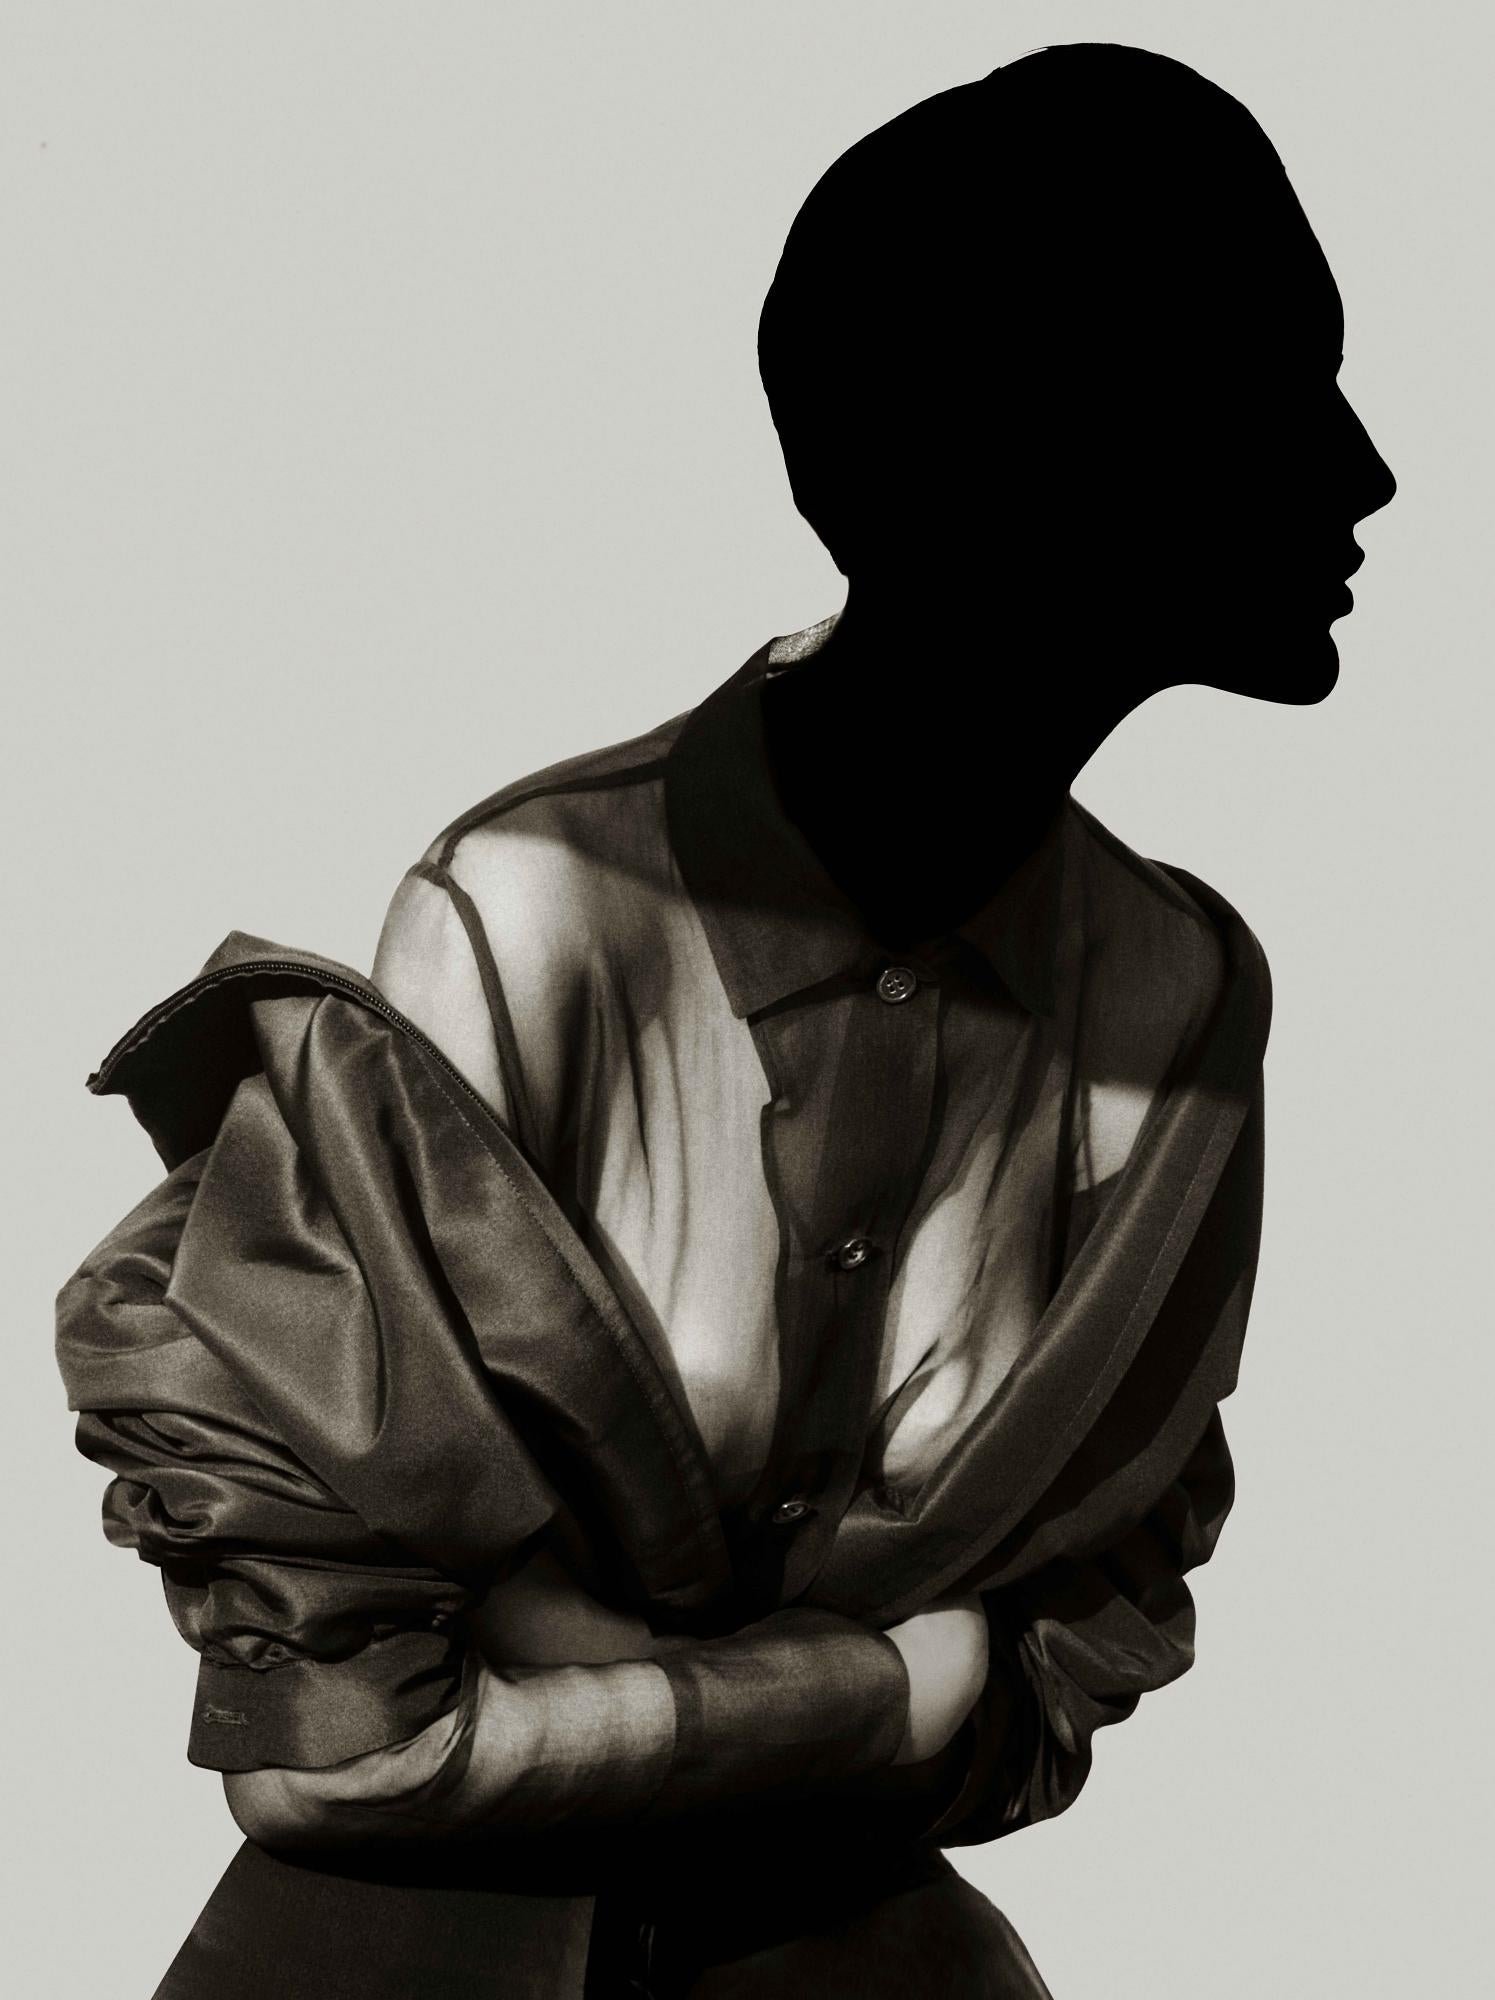 Albert Watson Black and White Photograph - Charlotte Flossaut in Prada Jacket, Milan, Italy